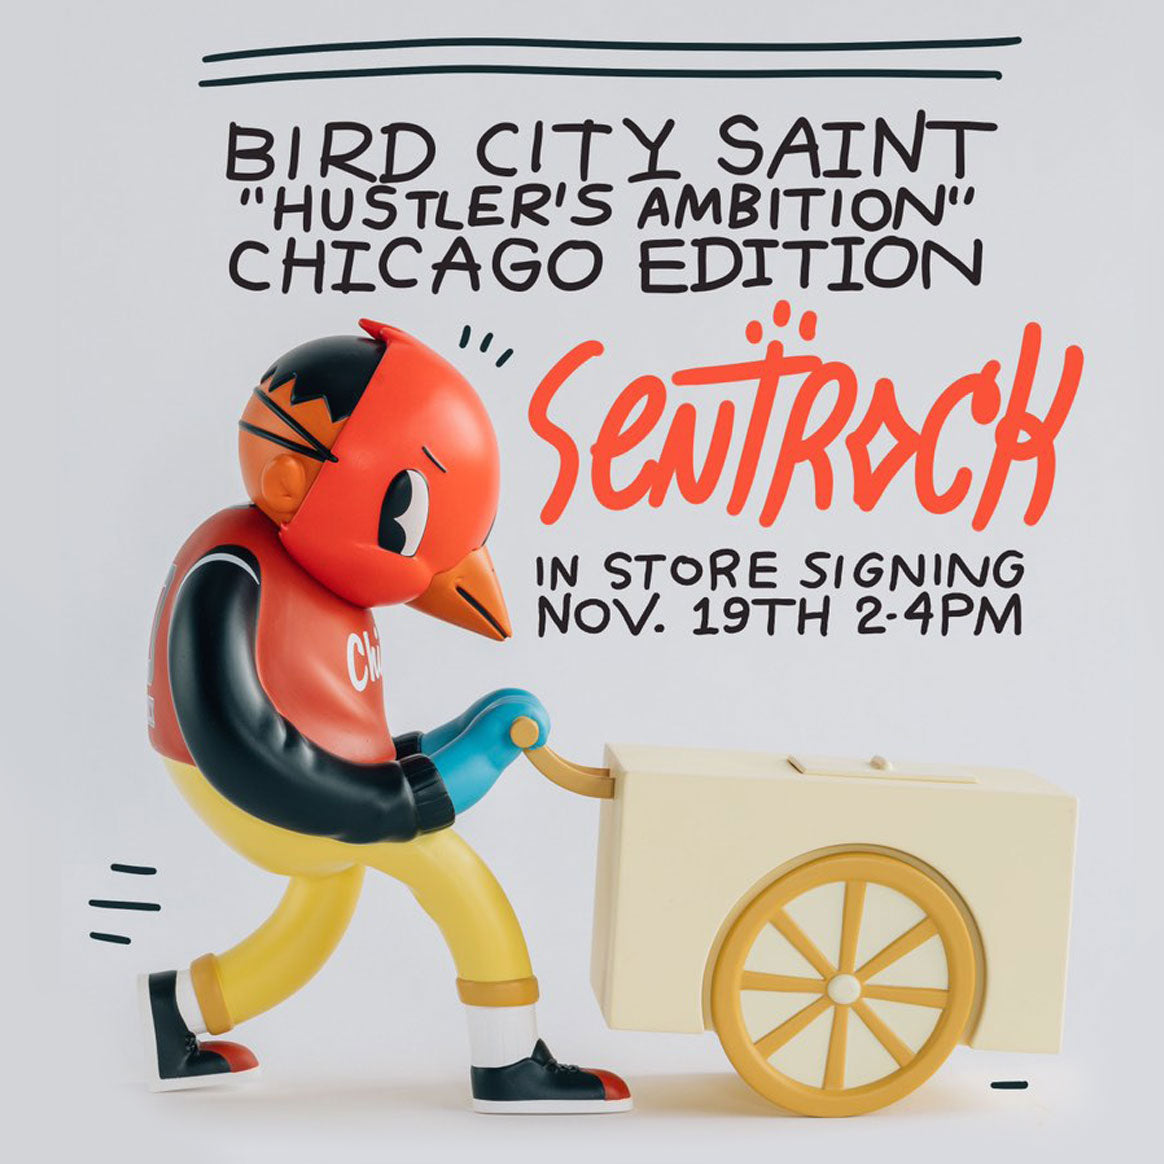 Promo Image for Sentrock Signing